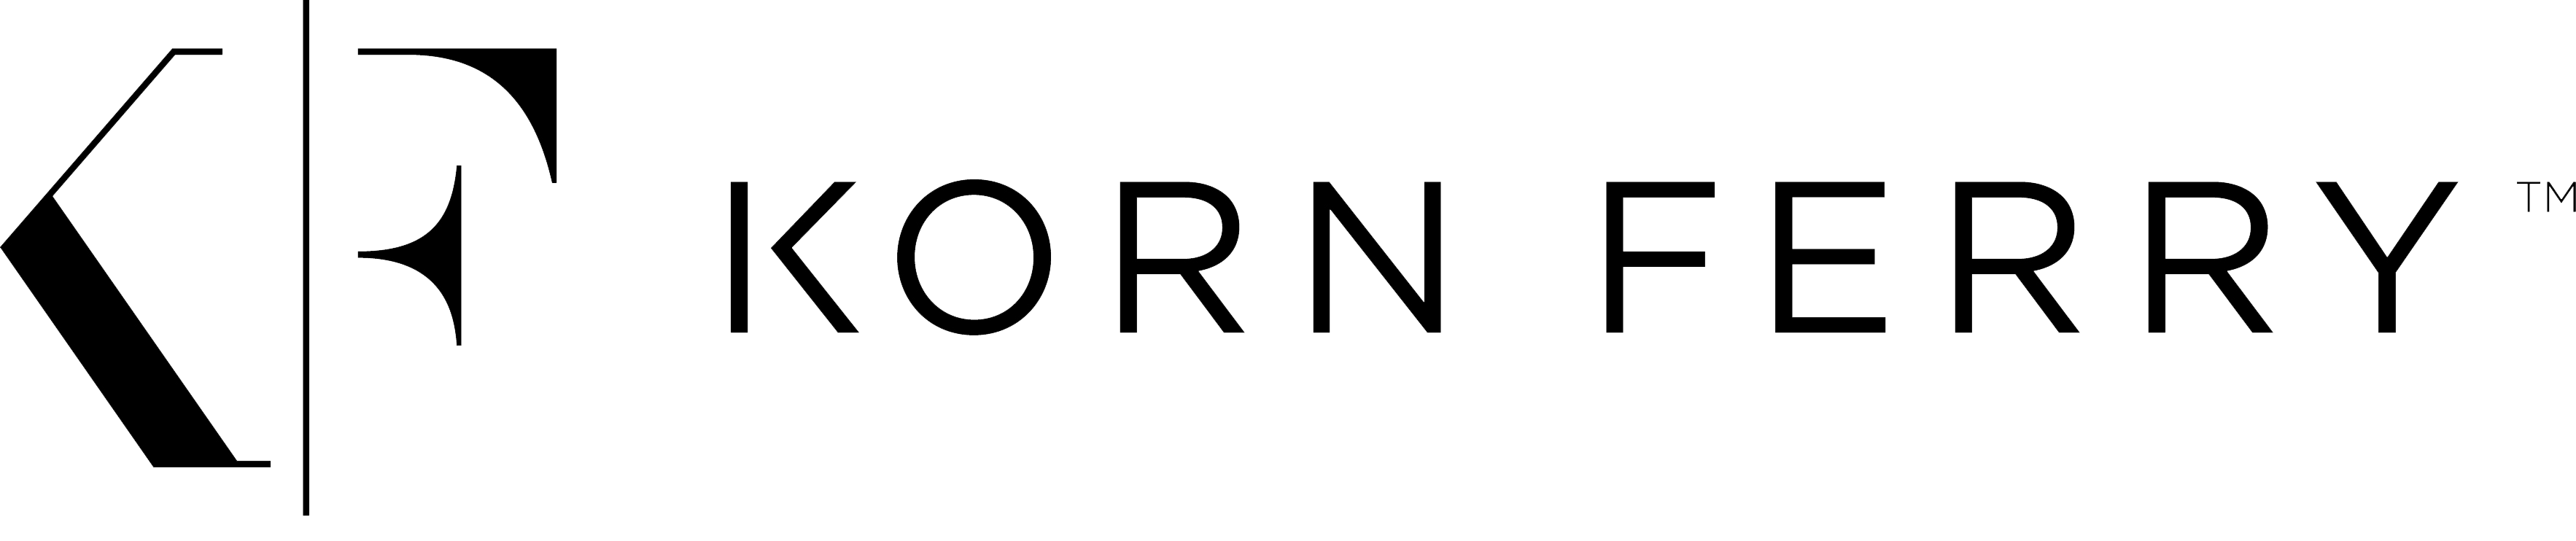 Korn-Ferry_Logo